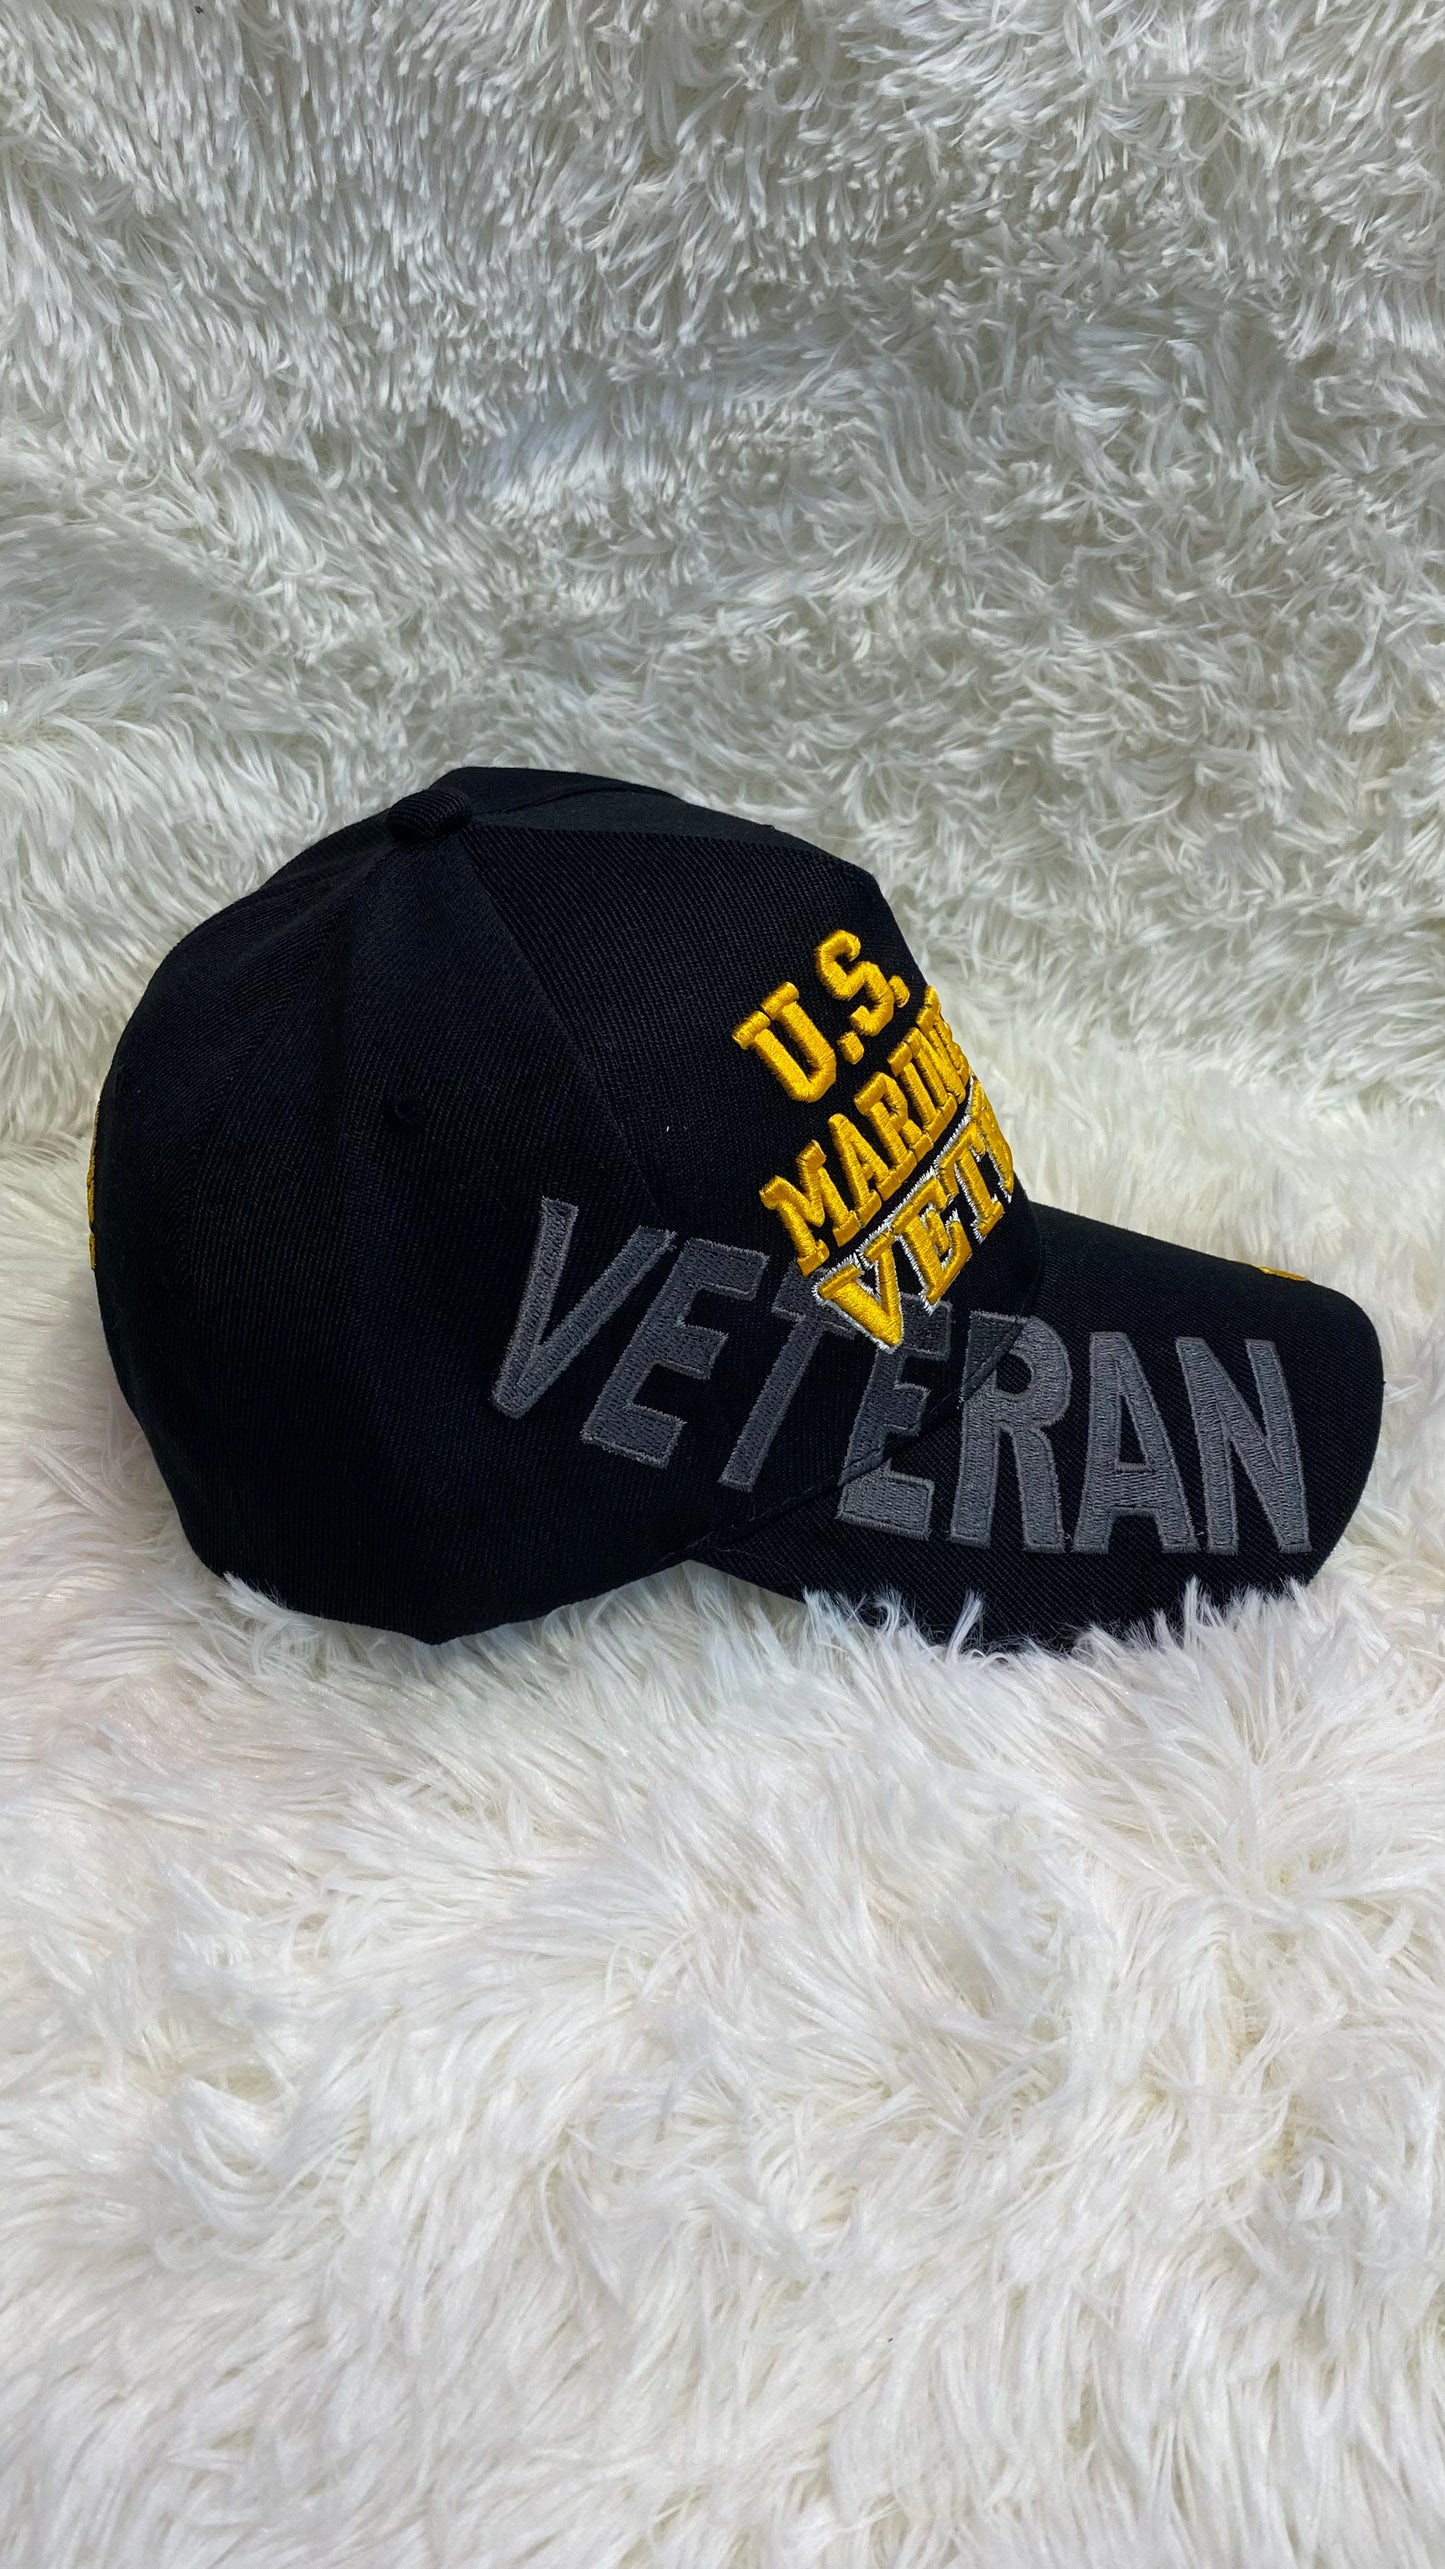 US Marine Veteran black Hat